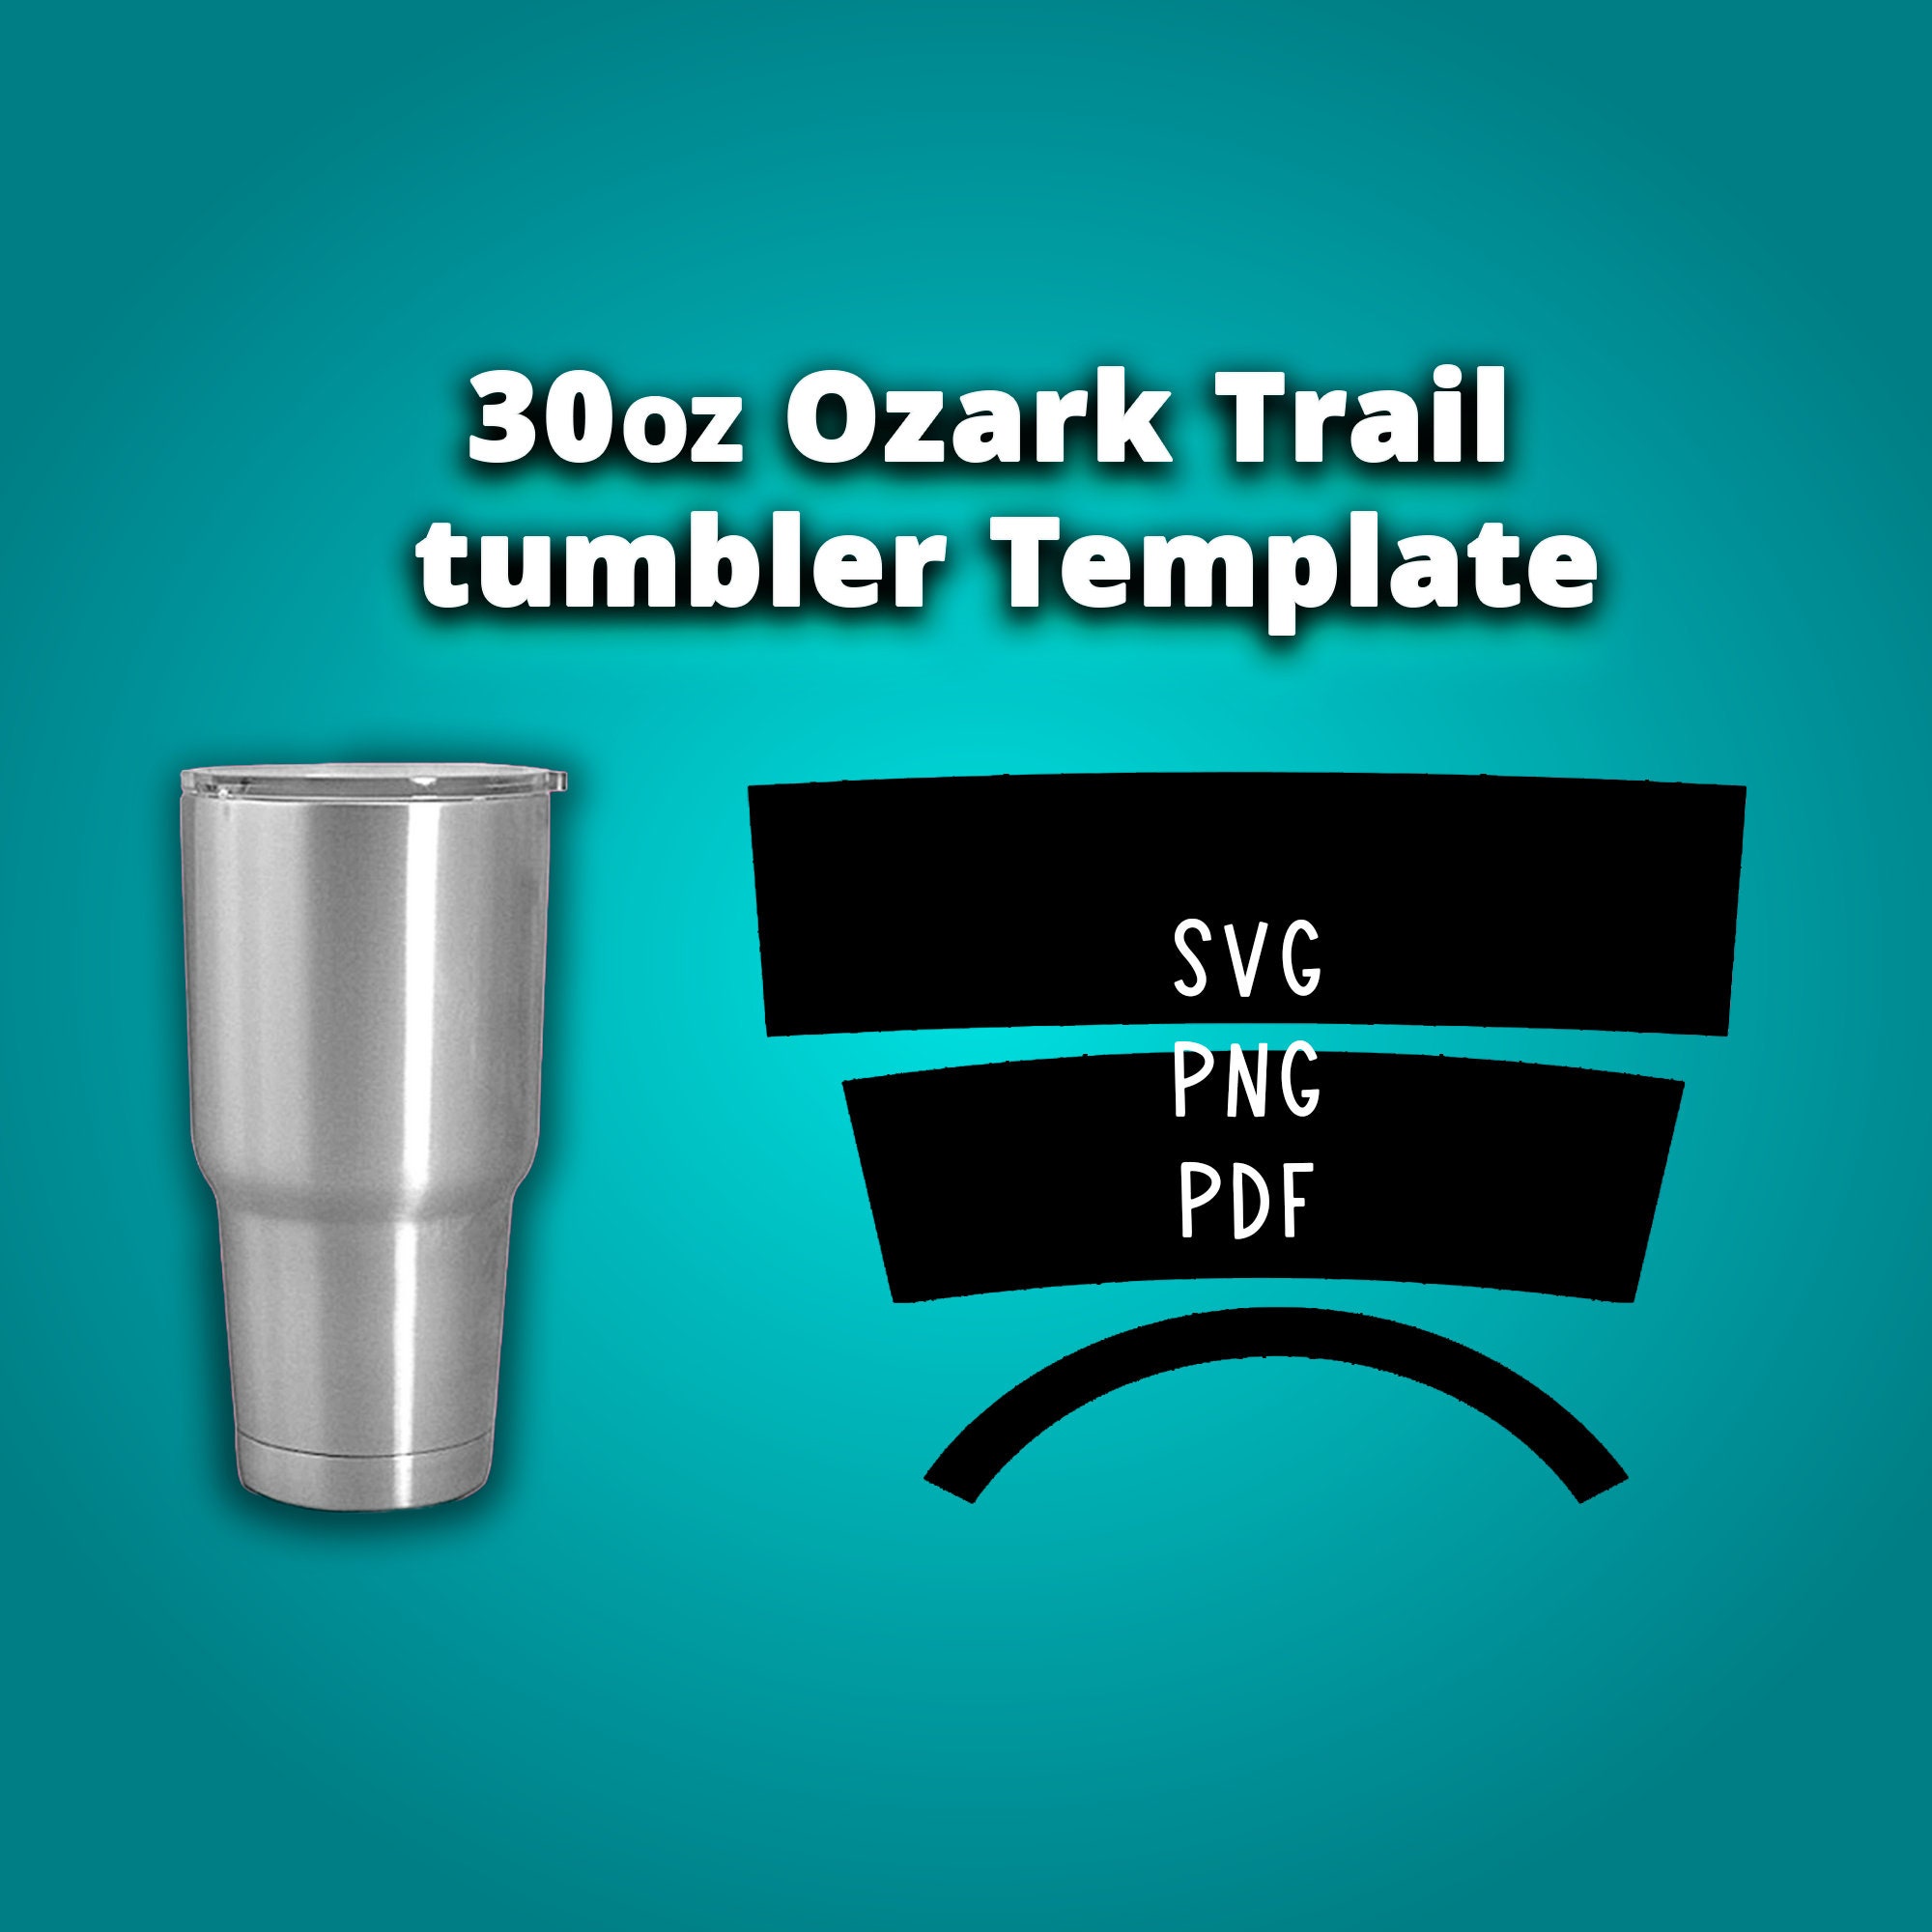 Ozark Trail 20 oz tumbler template Sublimation full wrap